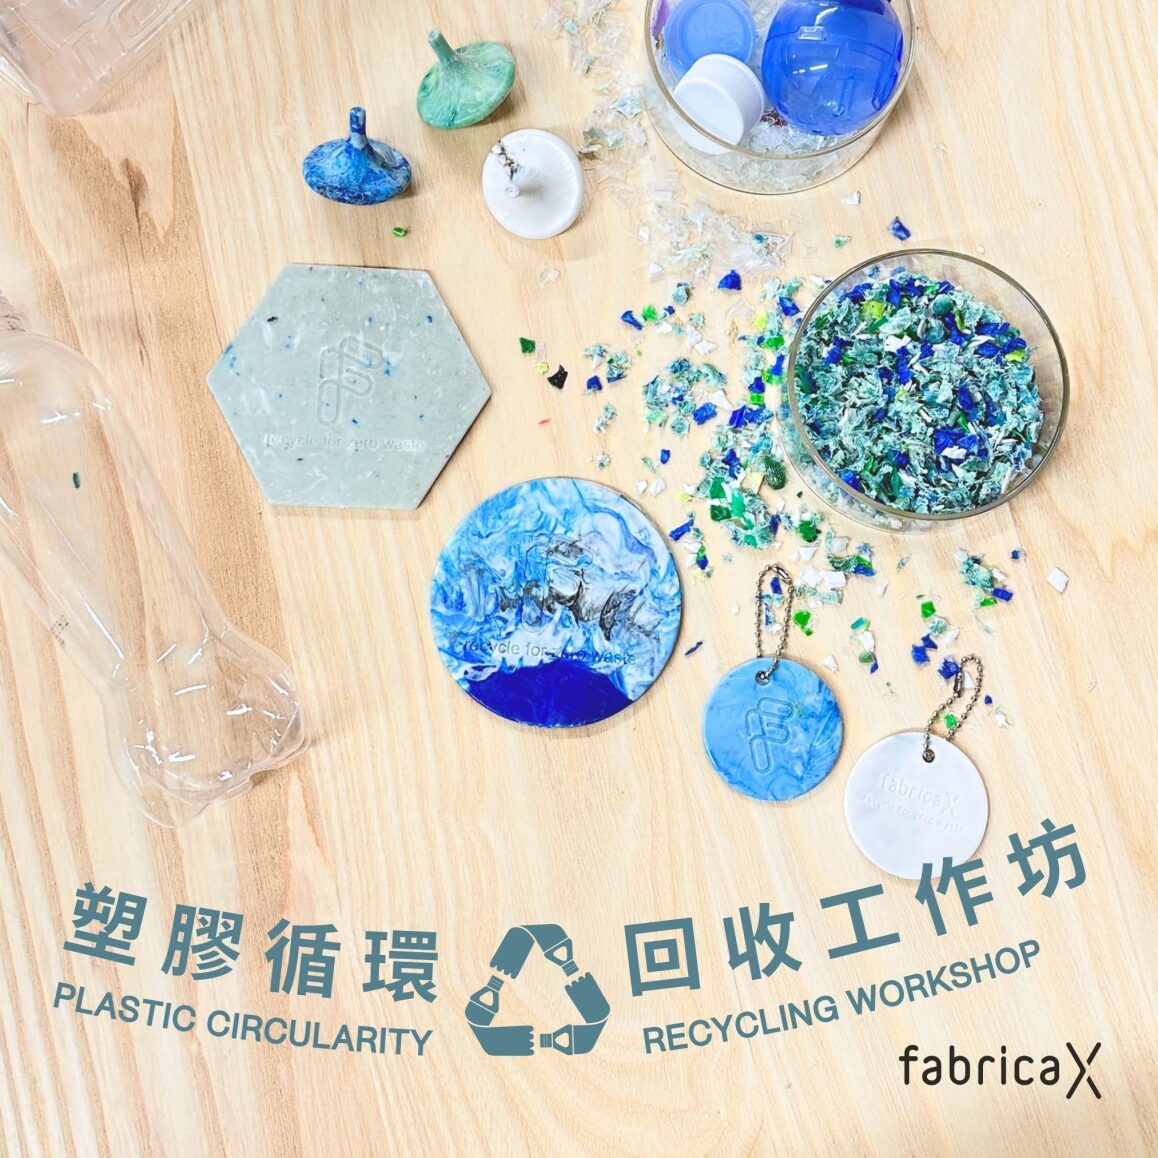 Plastic Circularity – Recycling Workshop